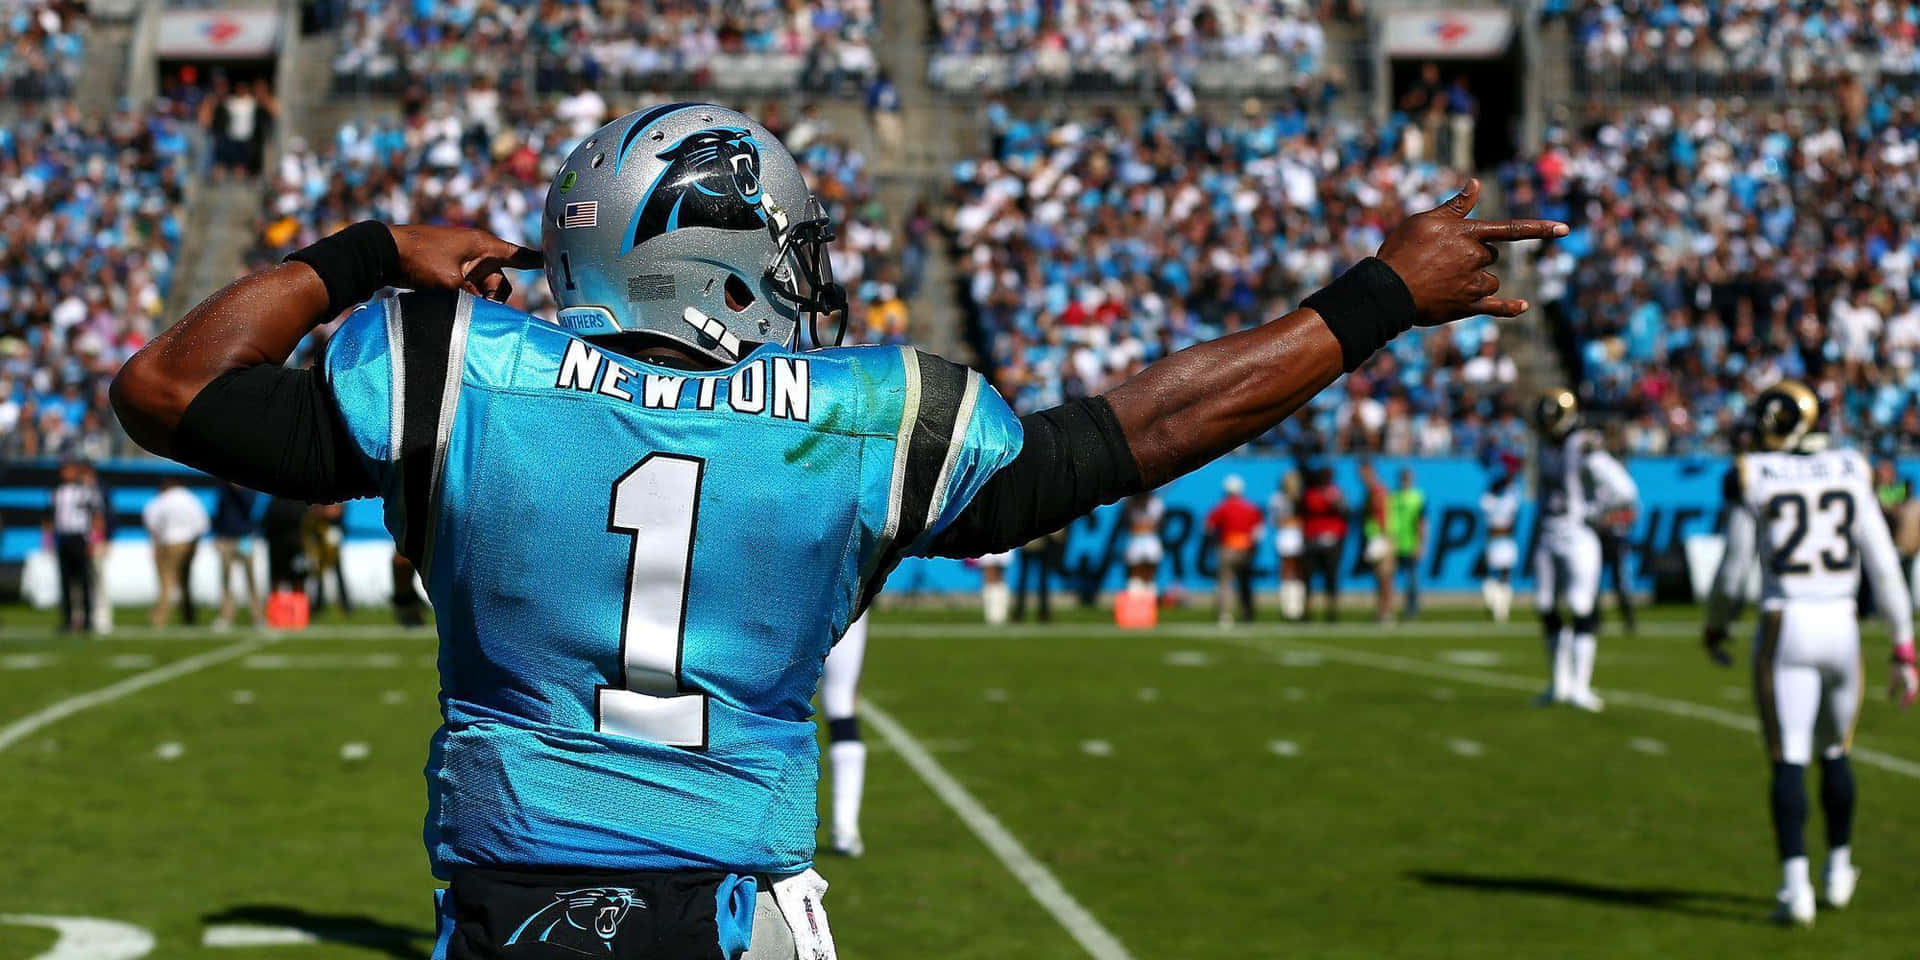 NFL Star Cam Newton Throwing a Touchdown Wallpaper